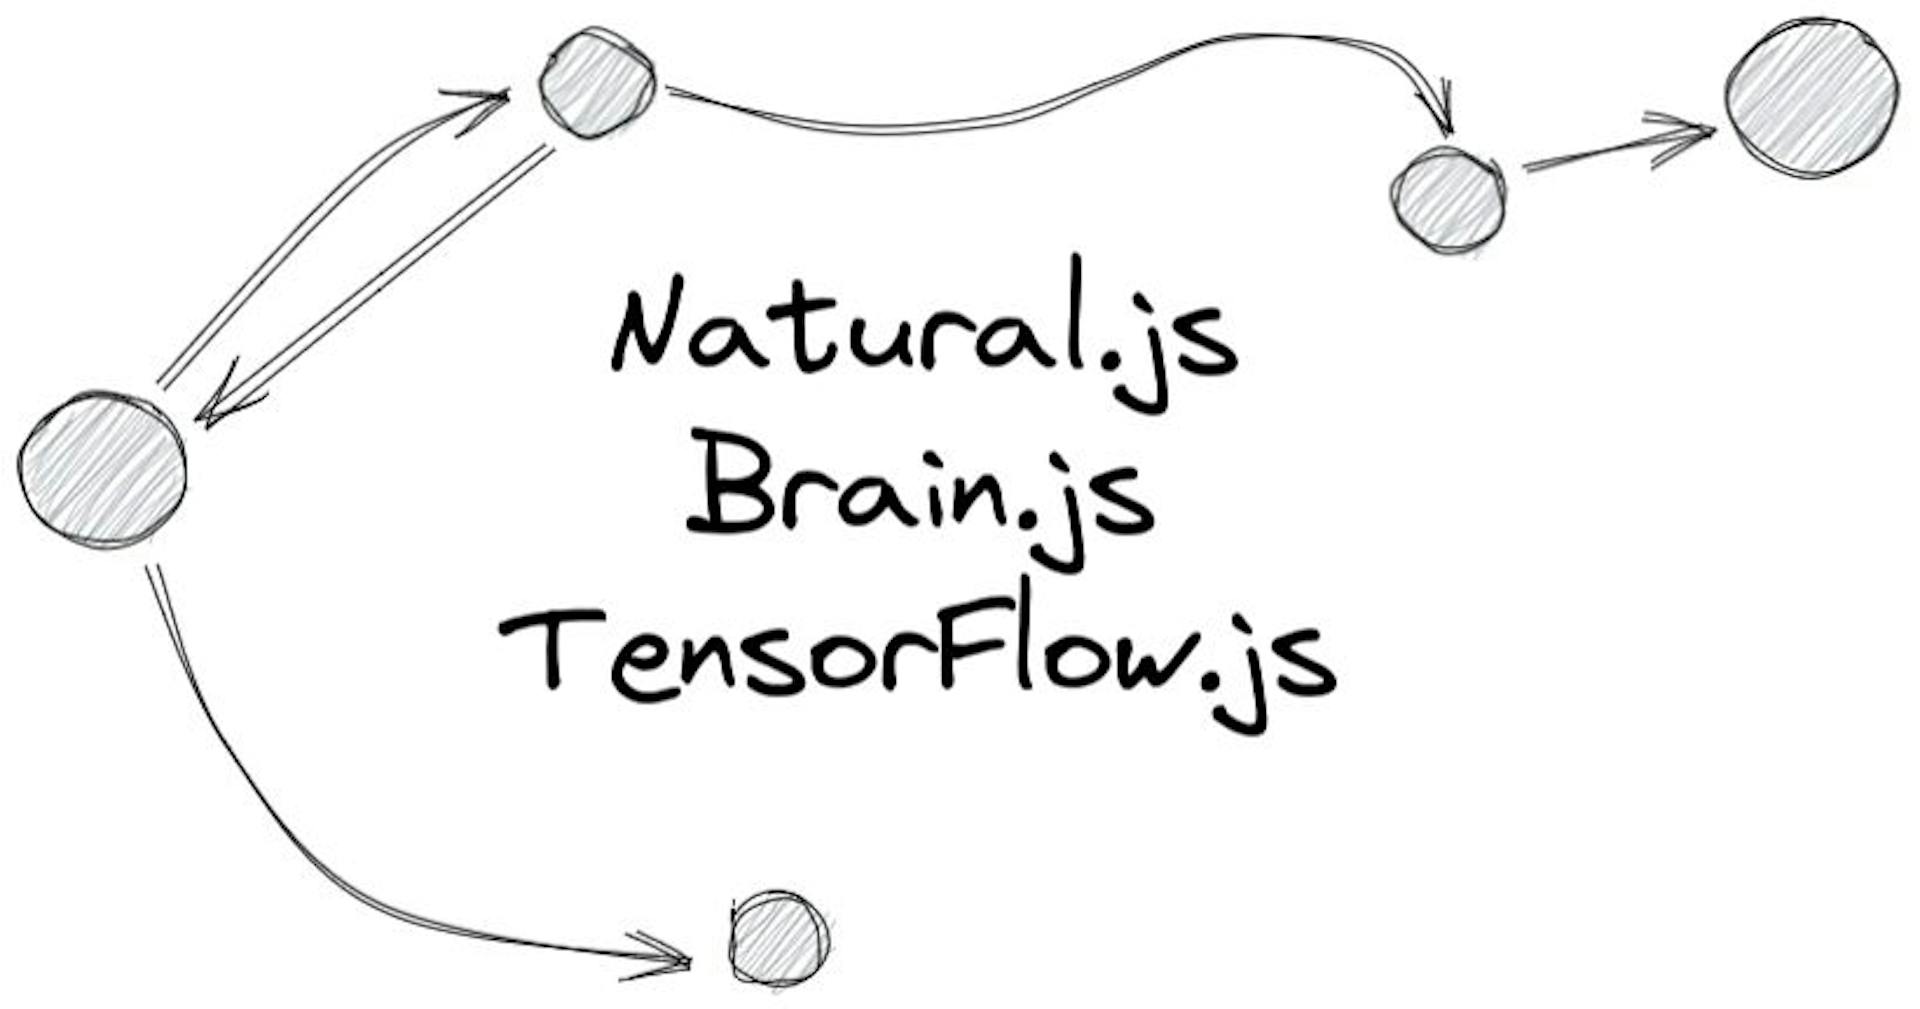 featured image - Text Classification in Javascript: Comparing Natural.js Vs. Brain.js Vs. TensorFlow.js